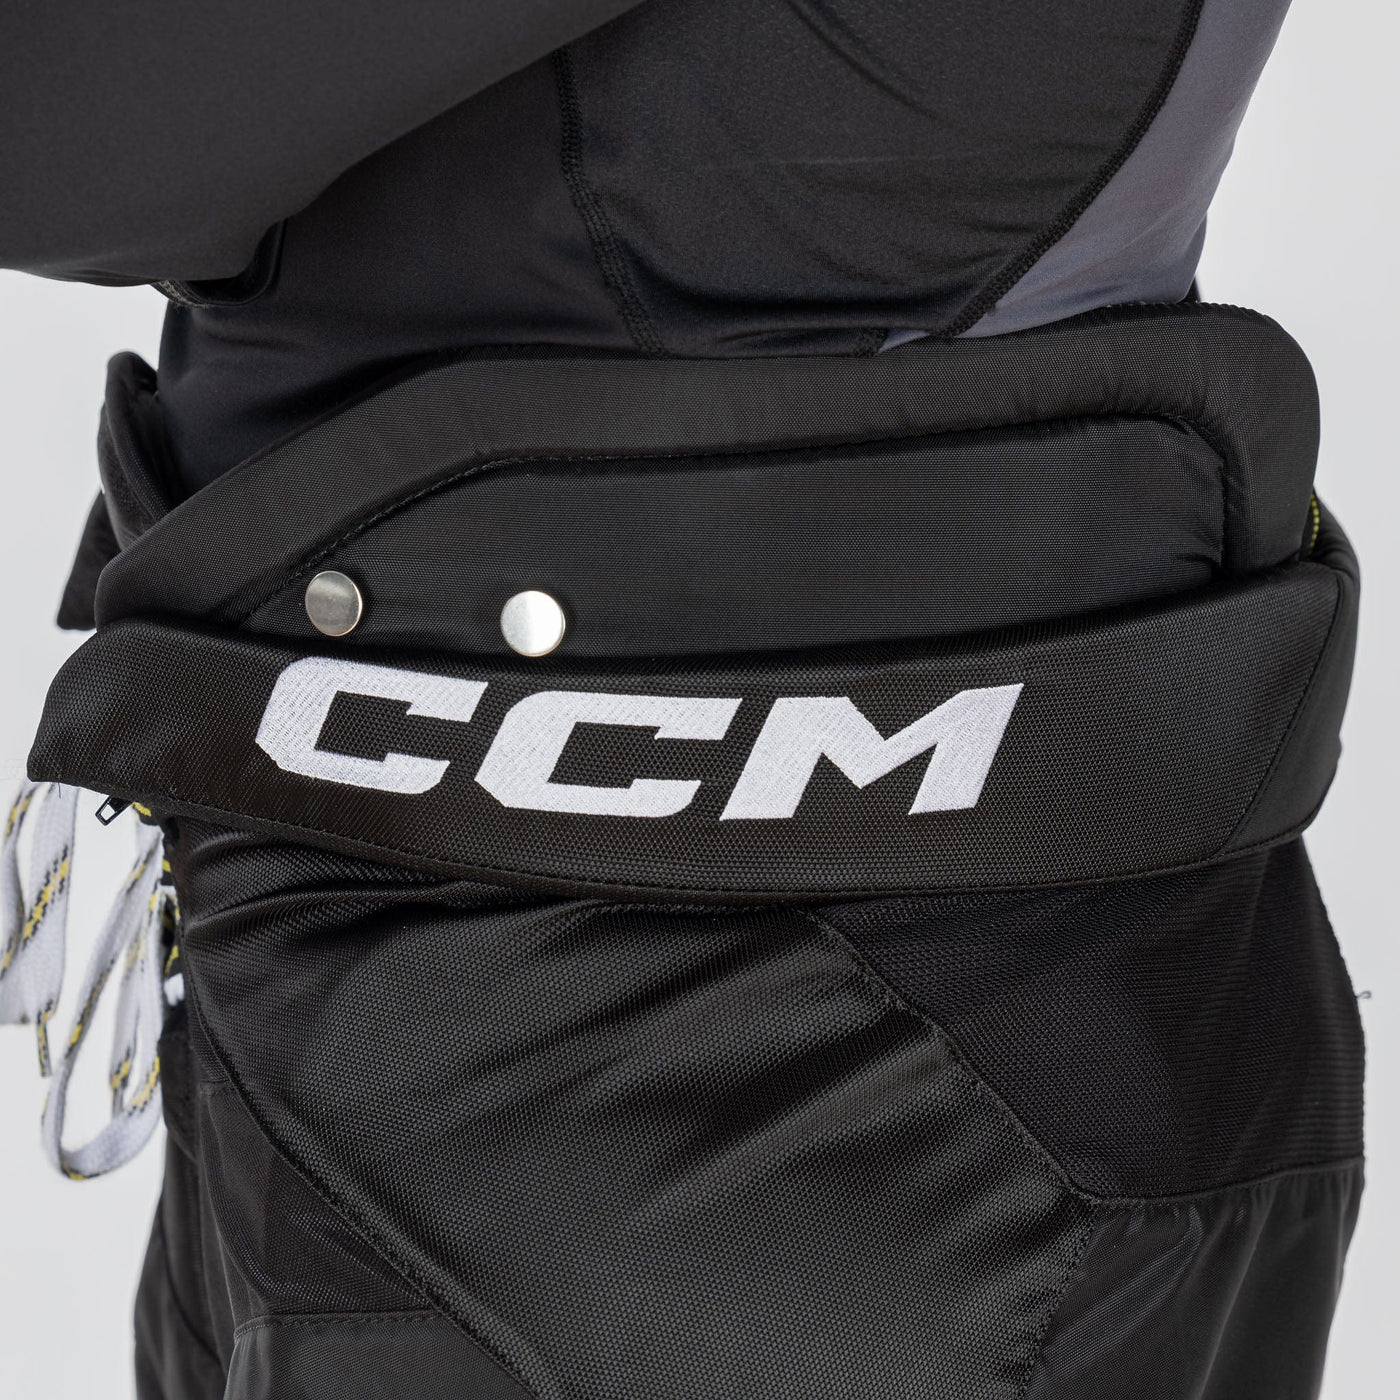 CCM Tacks AS-V Senior Hockey Pants - The Hockey Shop Source For Sports